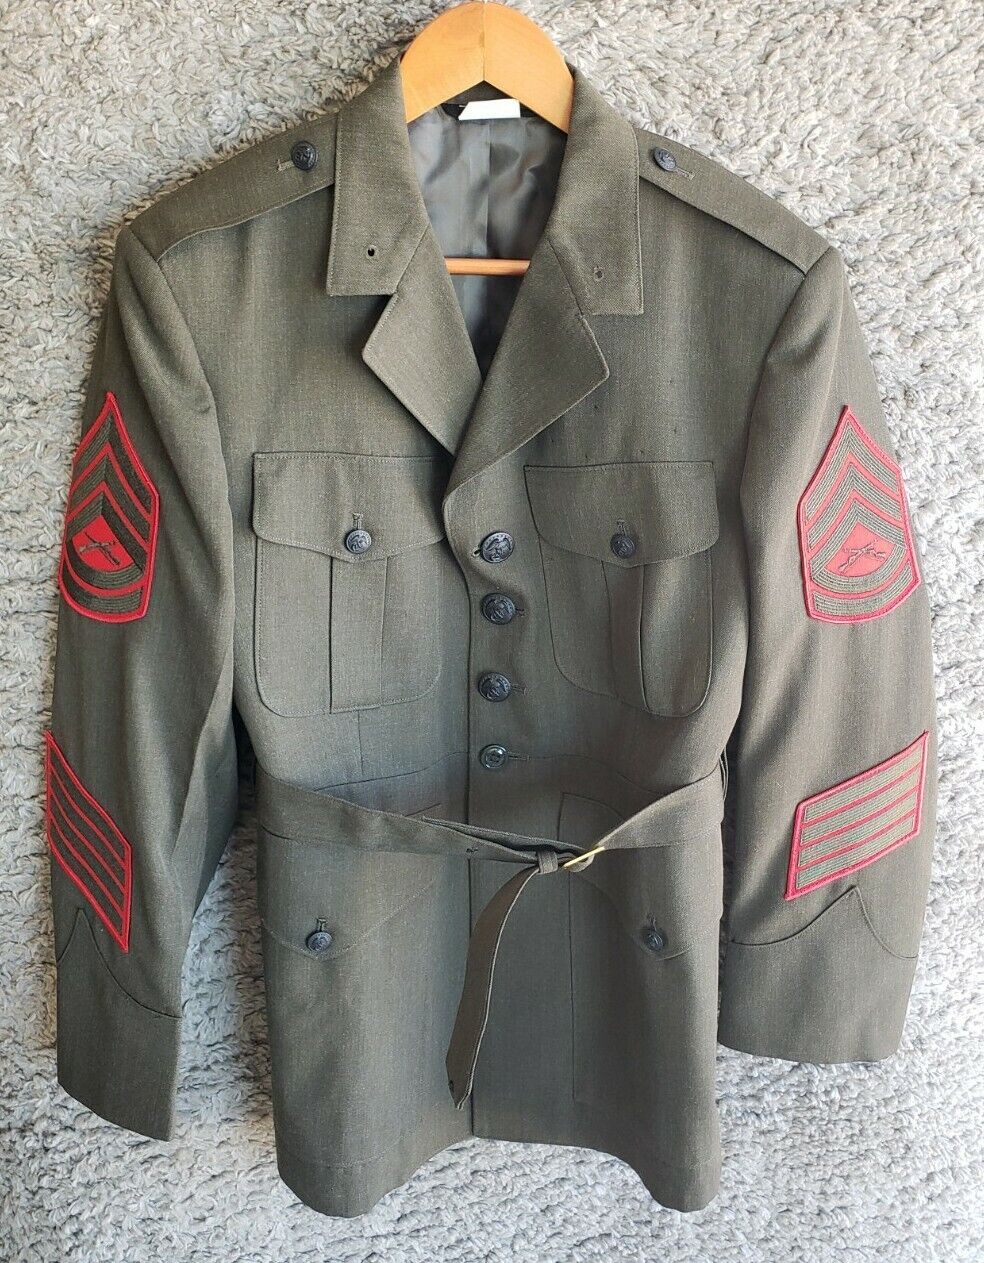 Vintage USMC Marines Coat Jacket size 41S Dark Green 